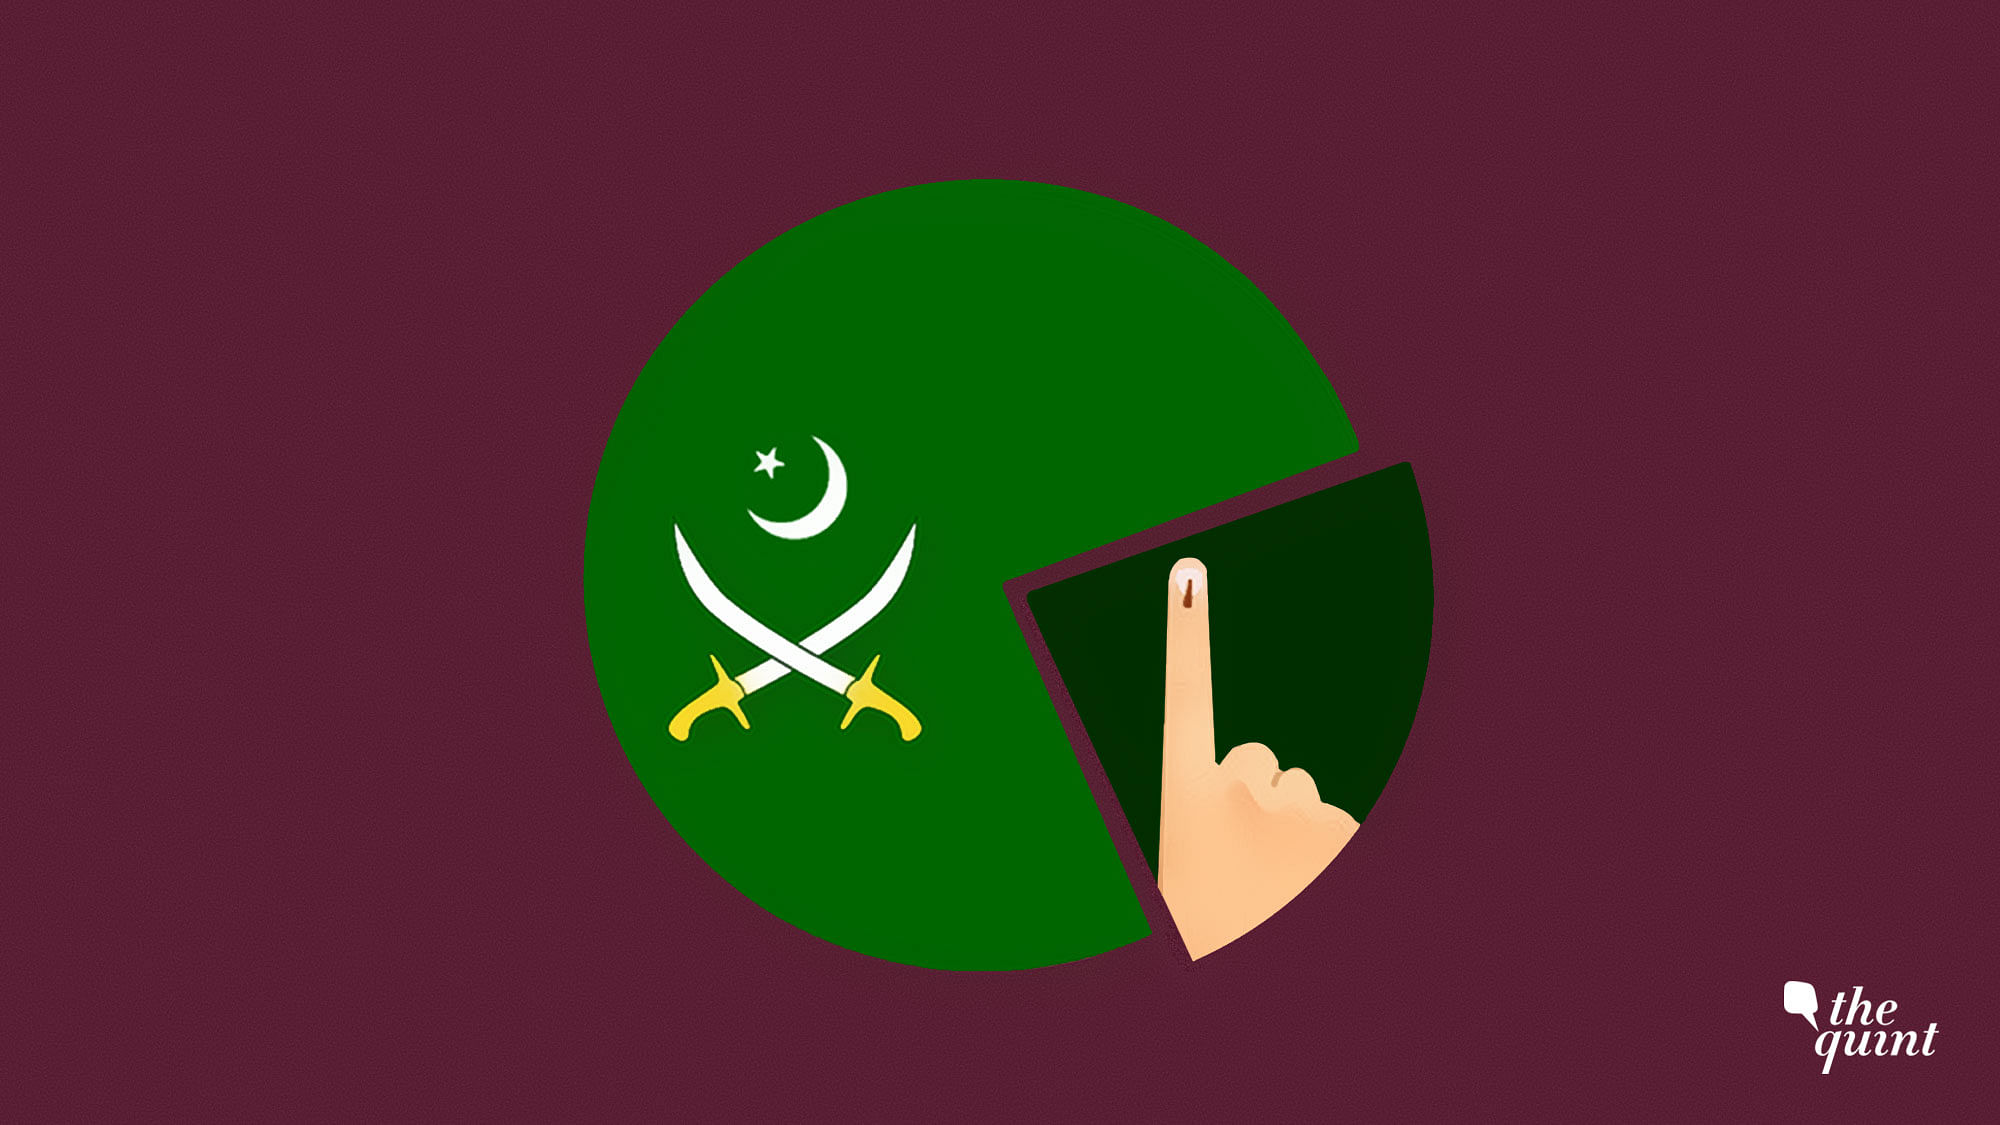 Pakistan Army’s symbol used for representational purposes.